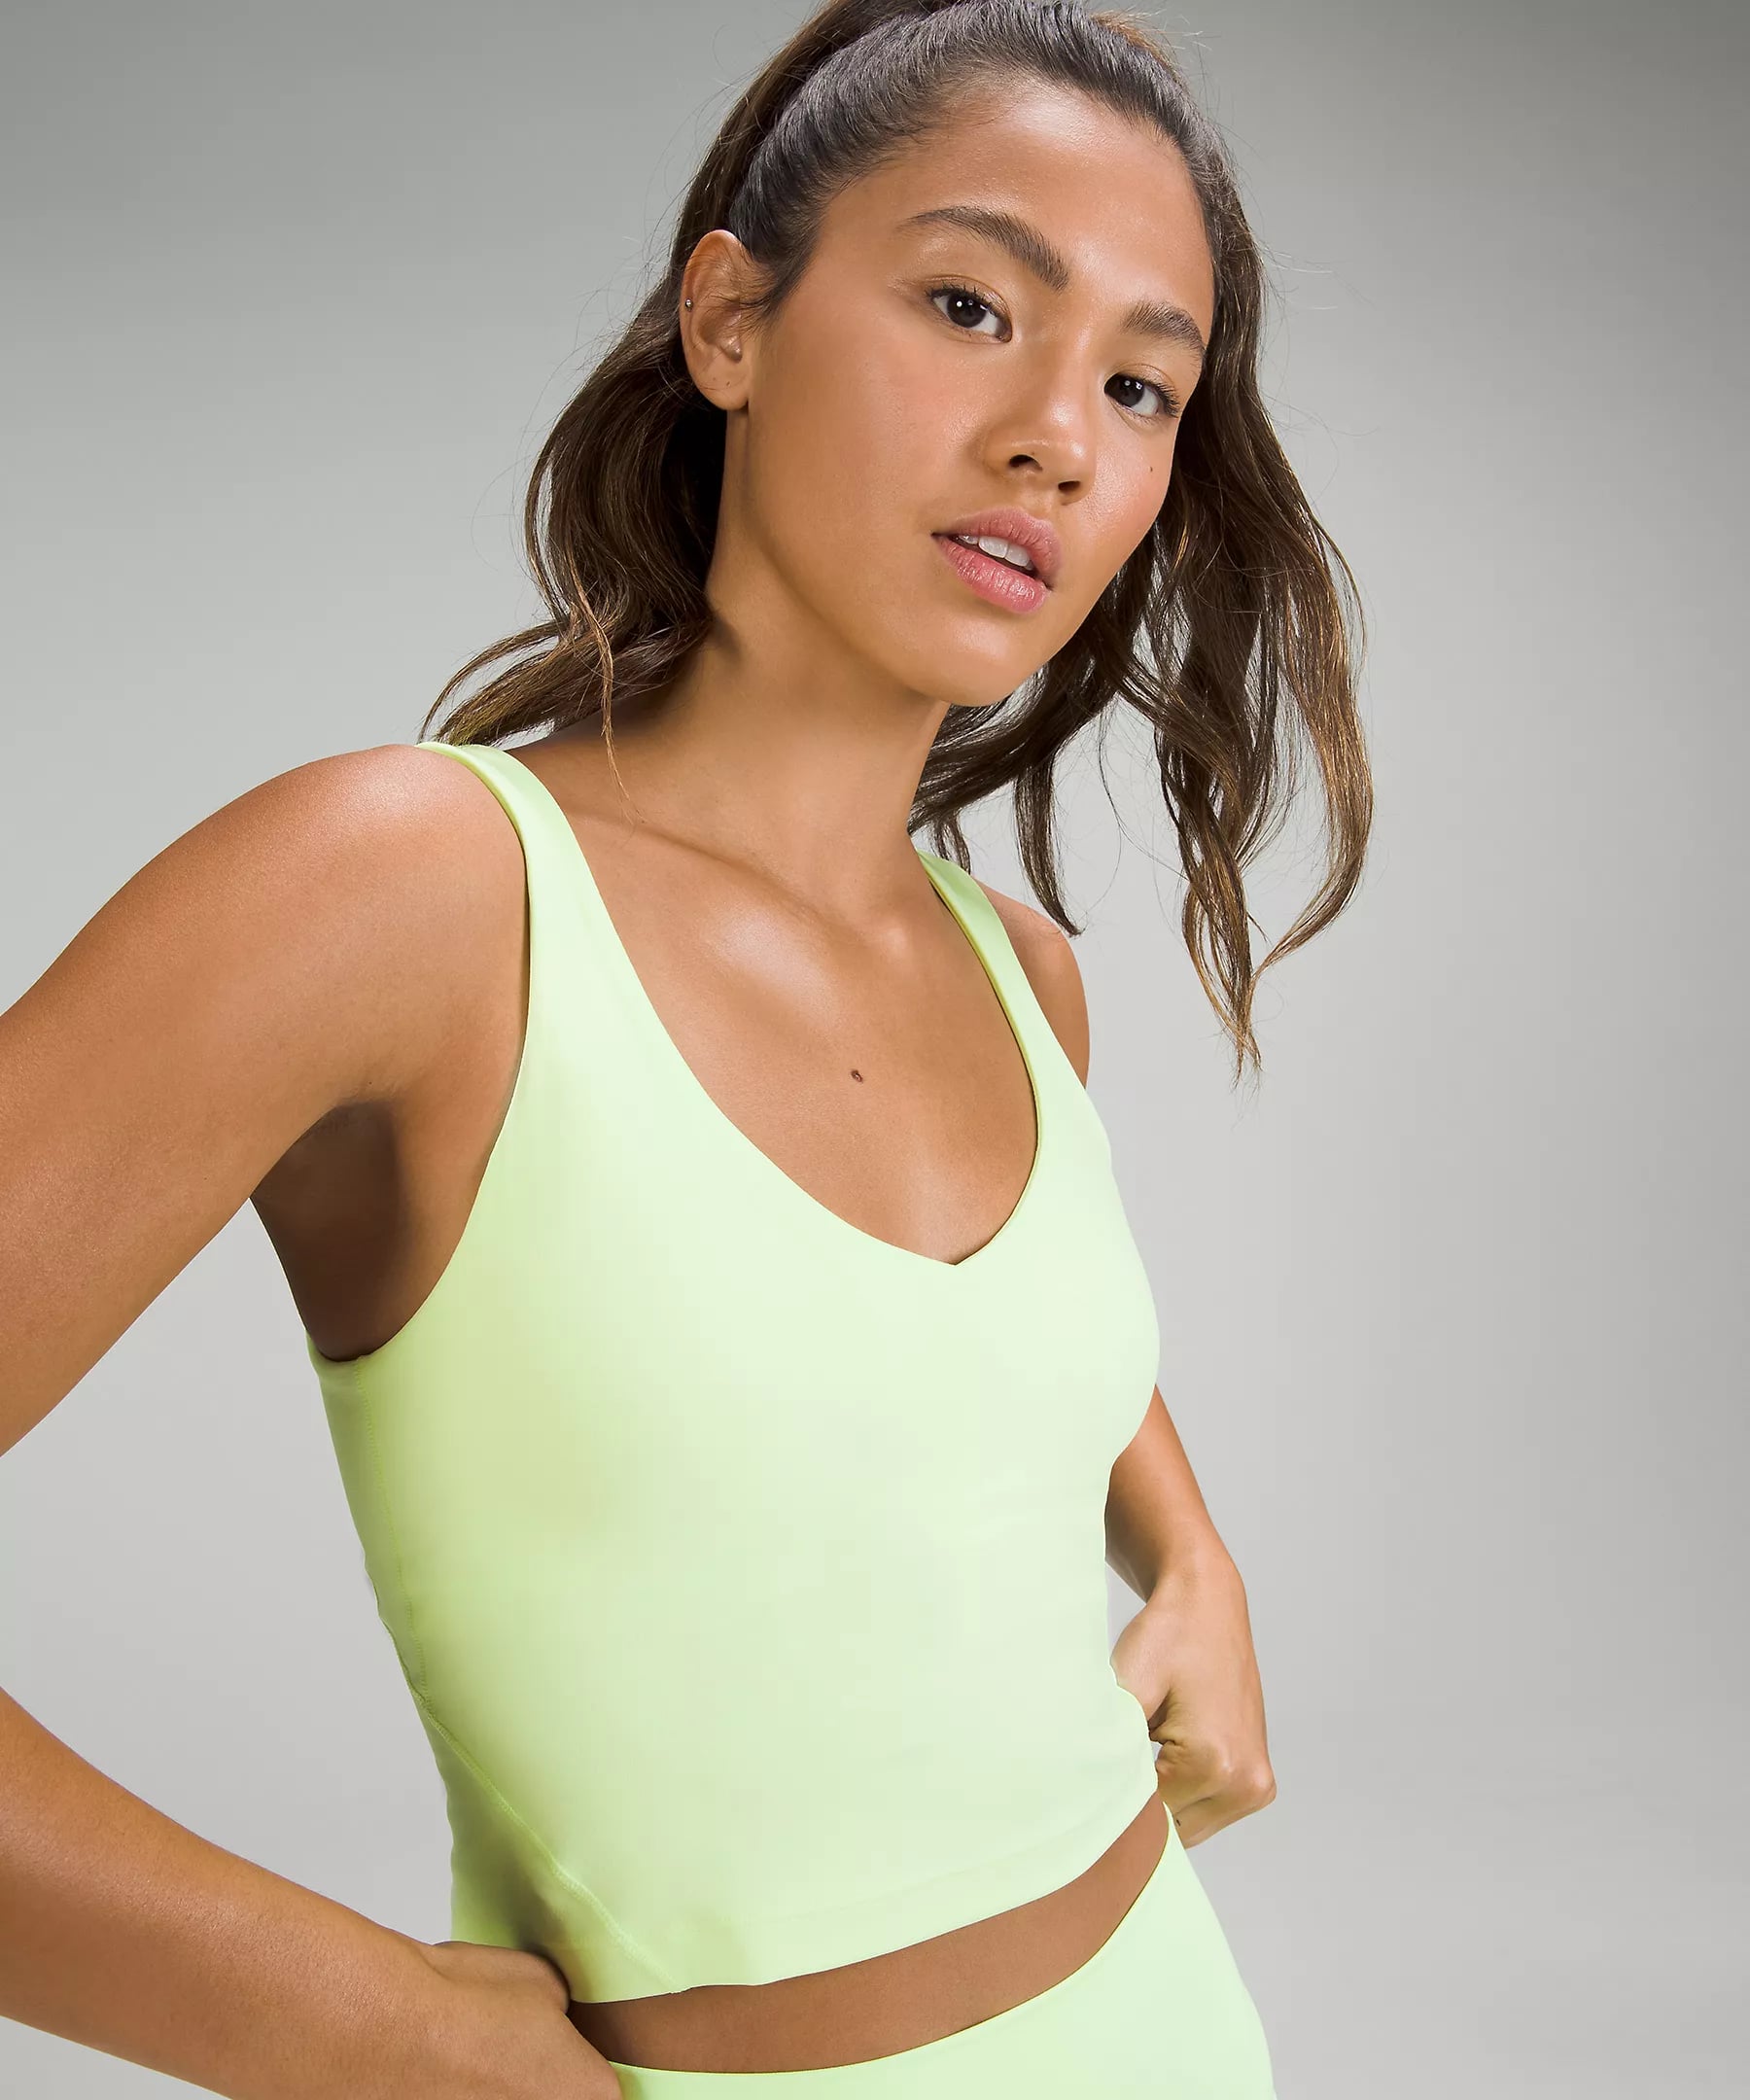 Casual Fitness Women's Sports Vest Sleeveless Workout Tank Top T-Shirt  Ladies Sport Gym Running Clothe Shirt